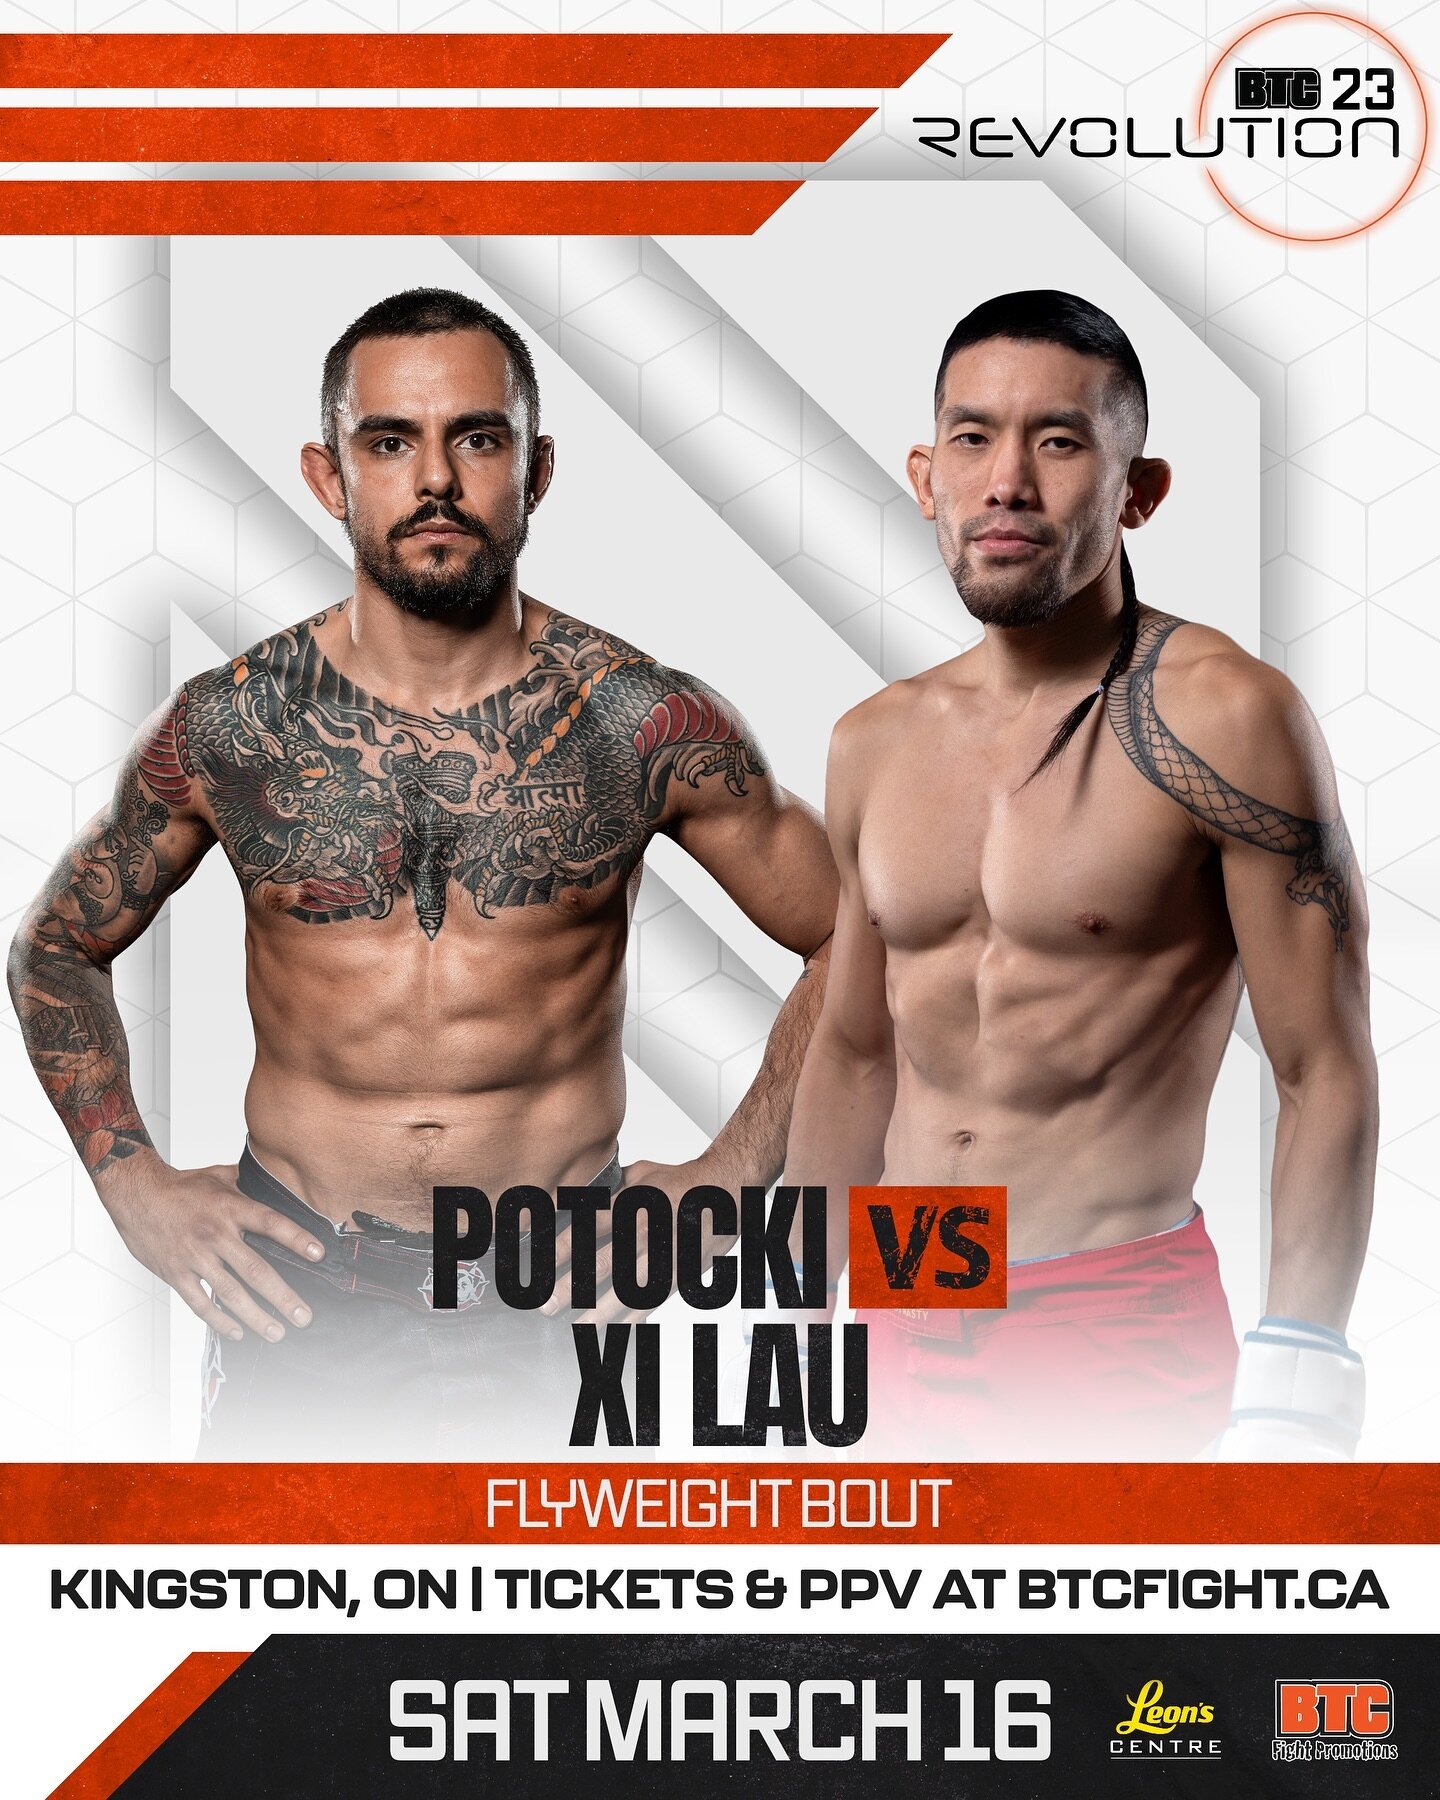 Anton Potocki vs Xi Lau ⚔️ Flyweight showdown coming to the @LeonsCentre on March 16th 🔥 @Xirpent makes his long awaited pro debut against undefeated @AntonPotocki at #BTC23 #Kingston #LeonsCentre